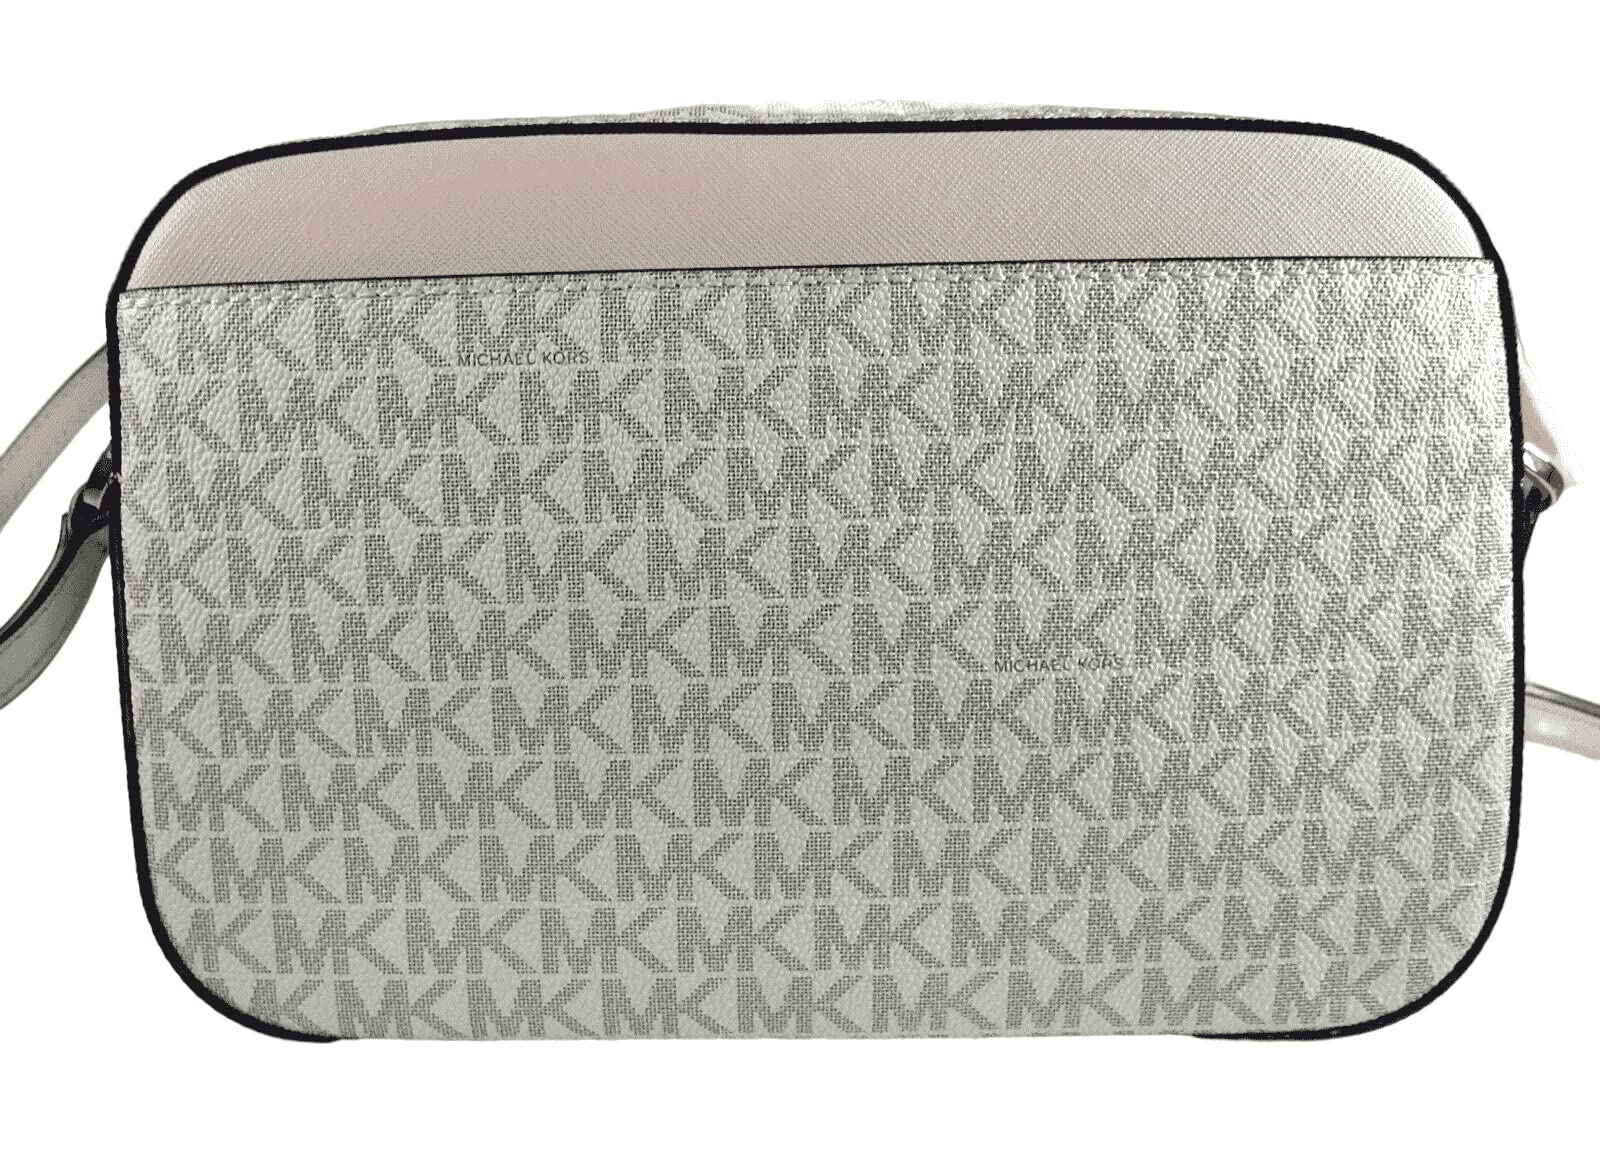 Michael Kors crossbody purse wwwfiestaci